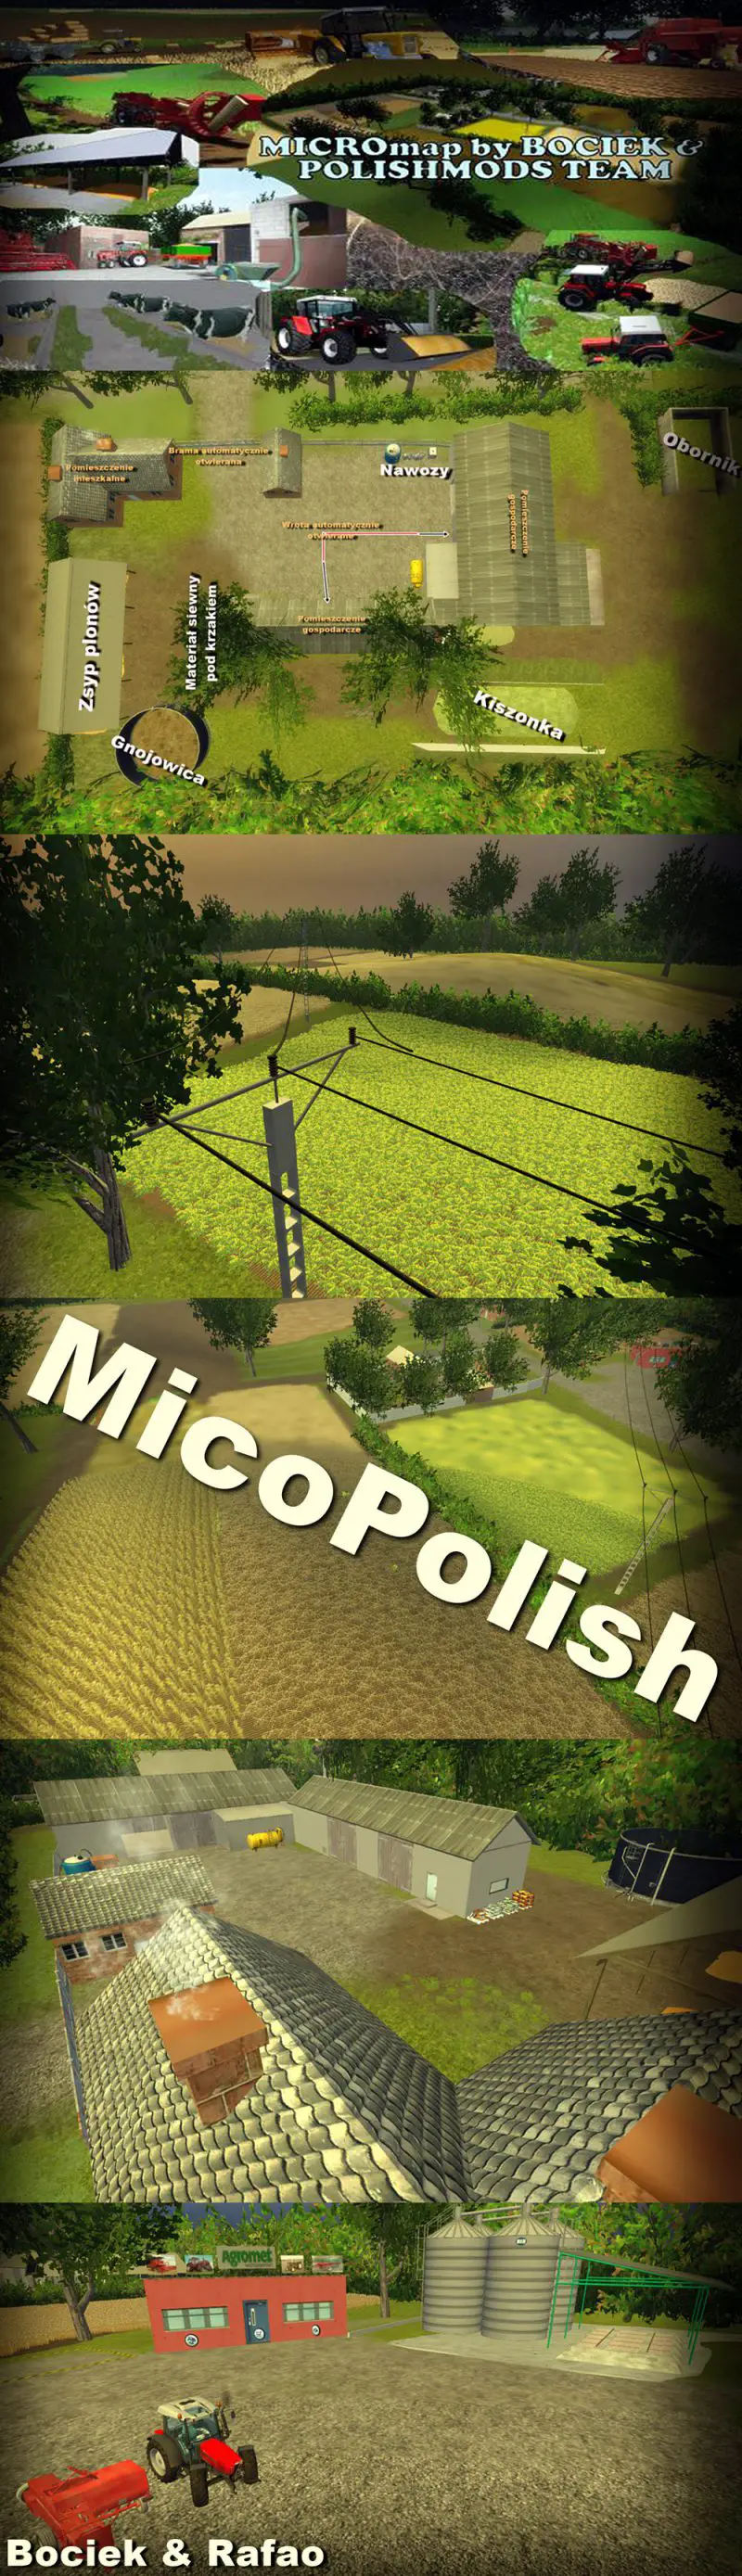 MicroPolish by Bociek